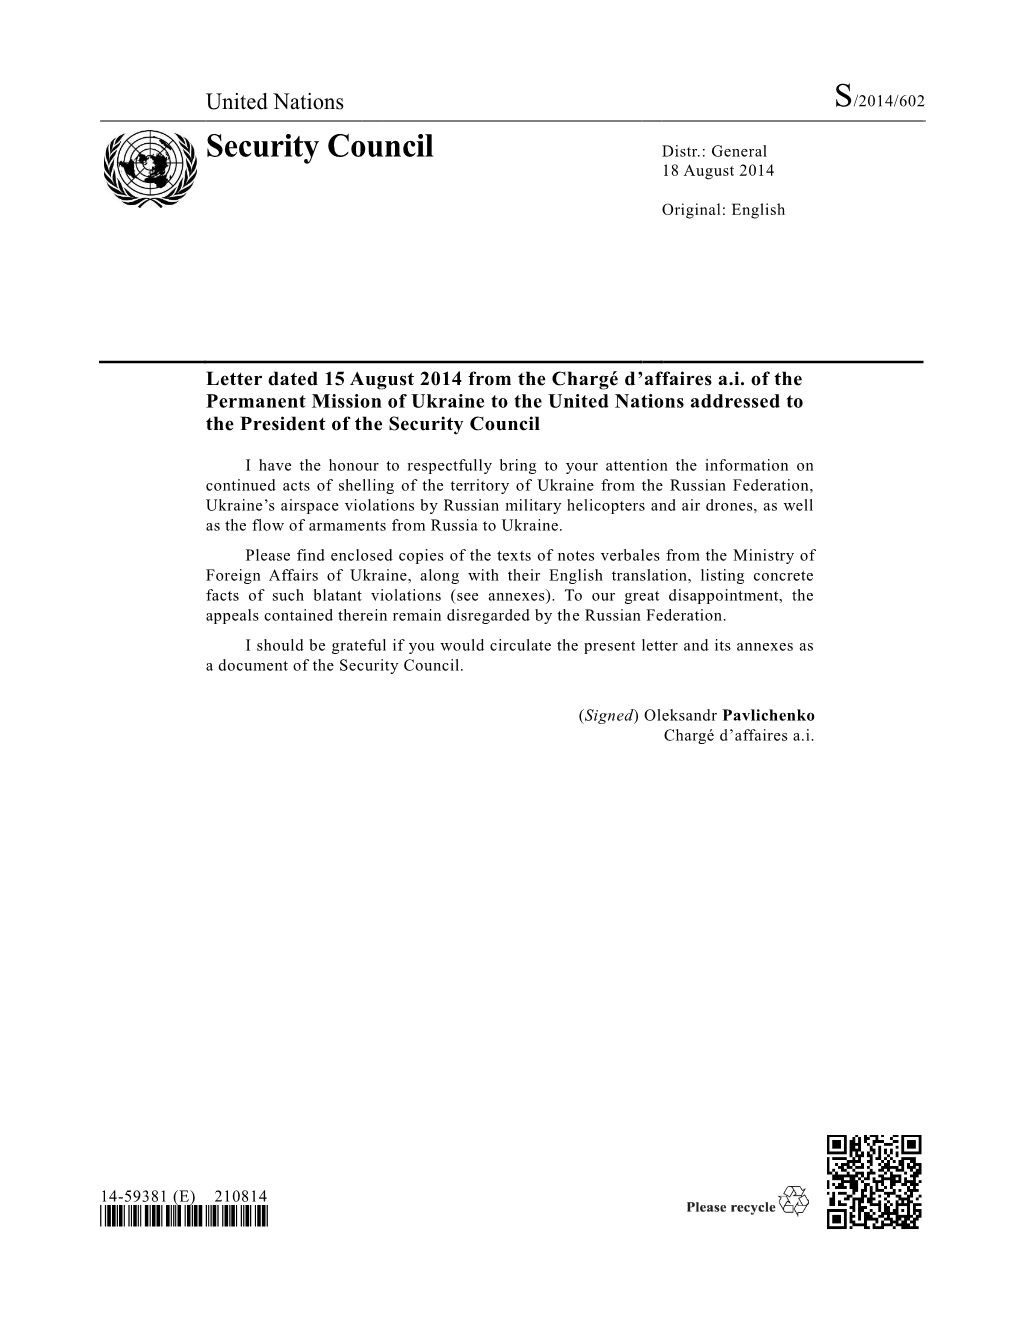 Security Council Distr.: General 18 August 2014